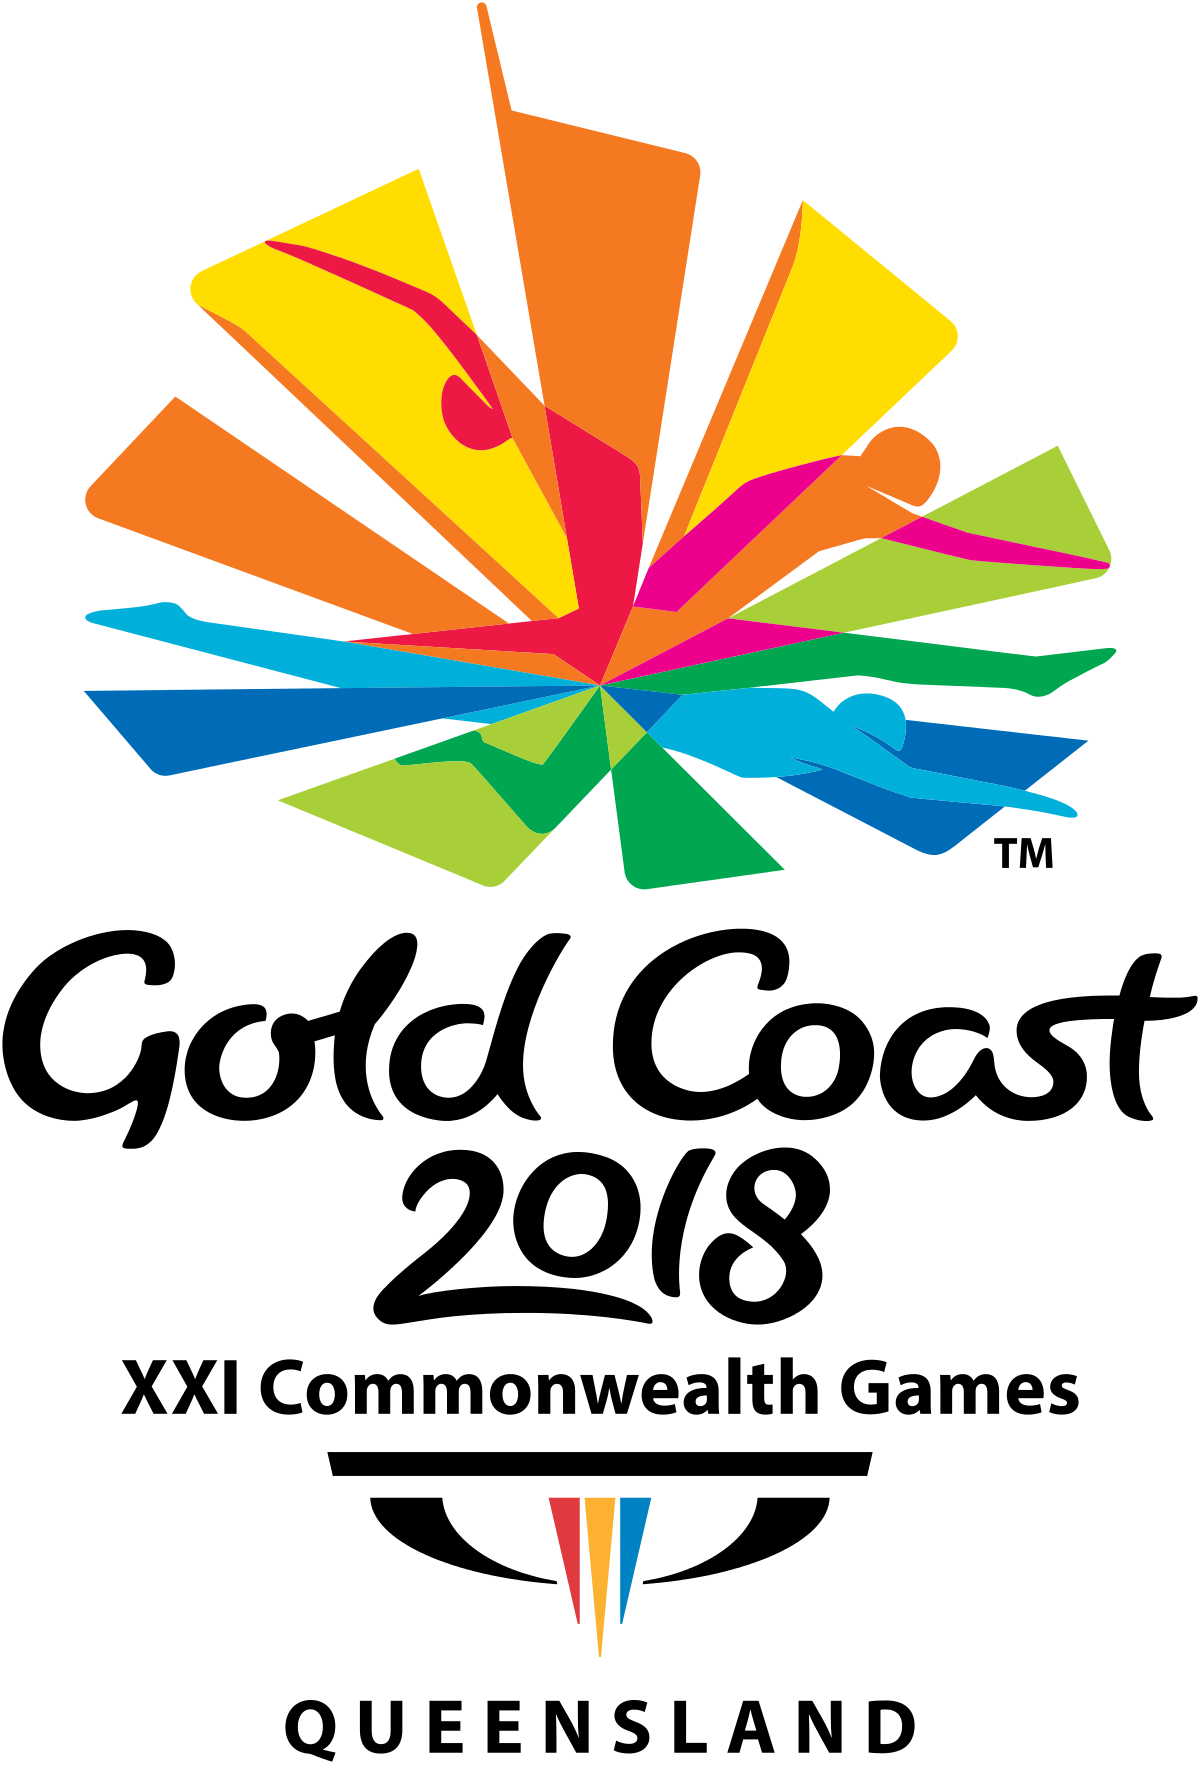 2018 Commonwealth Games - Wikipedia